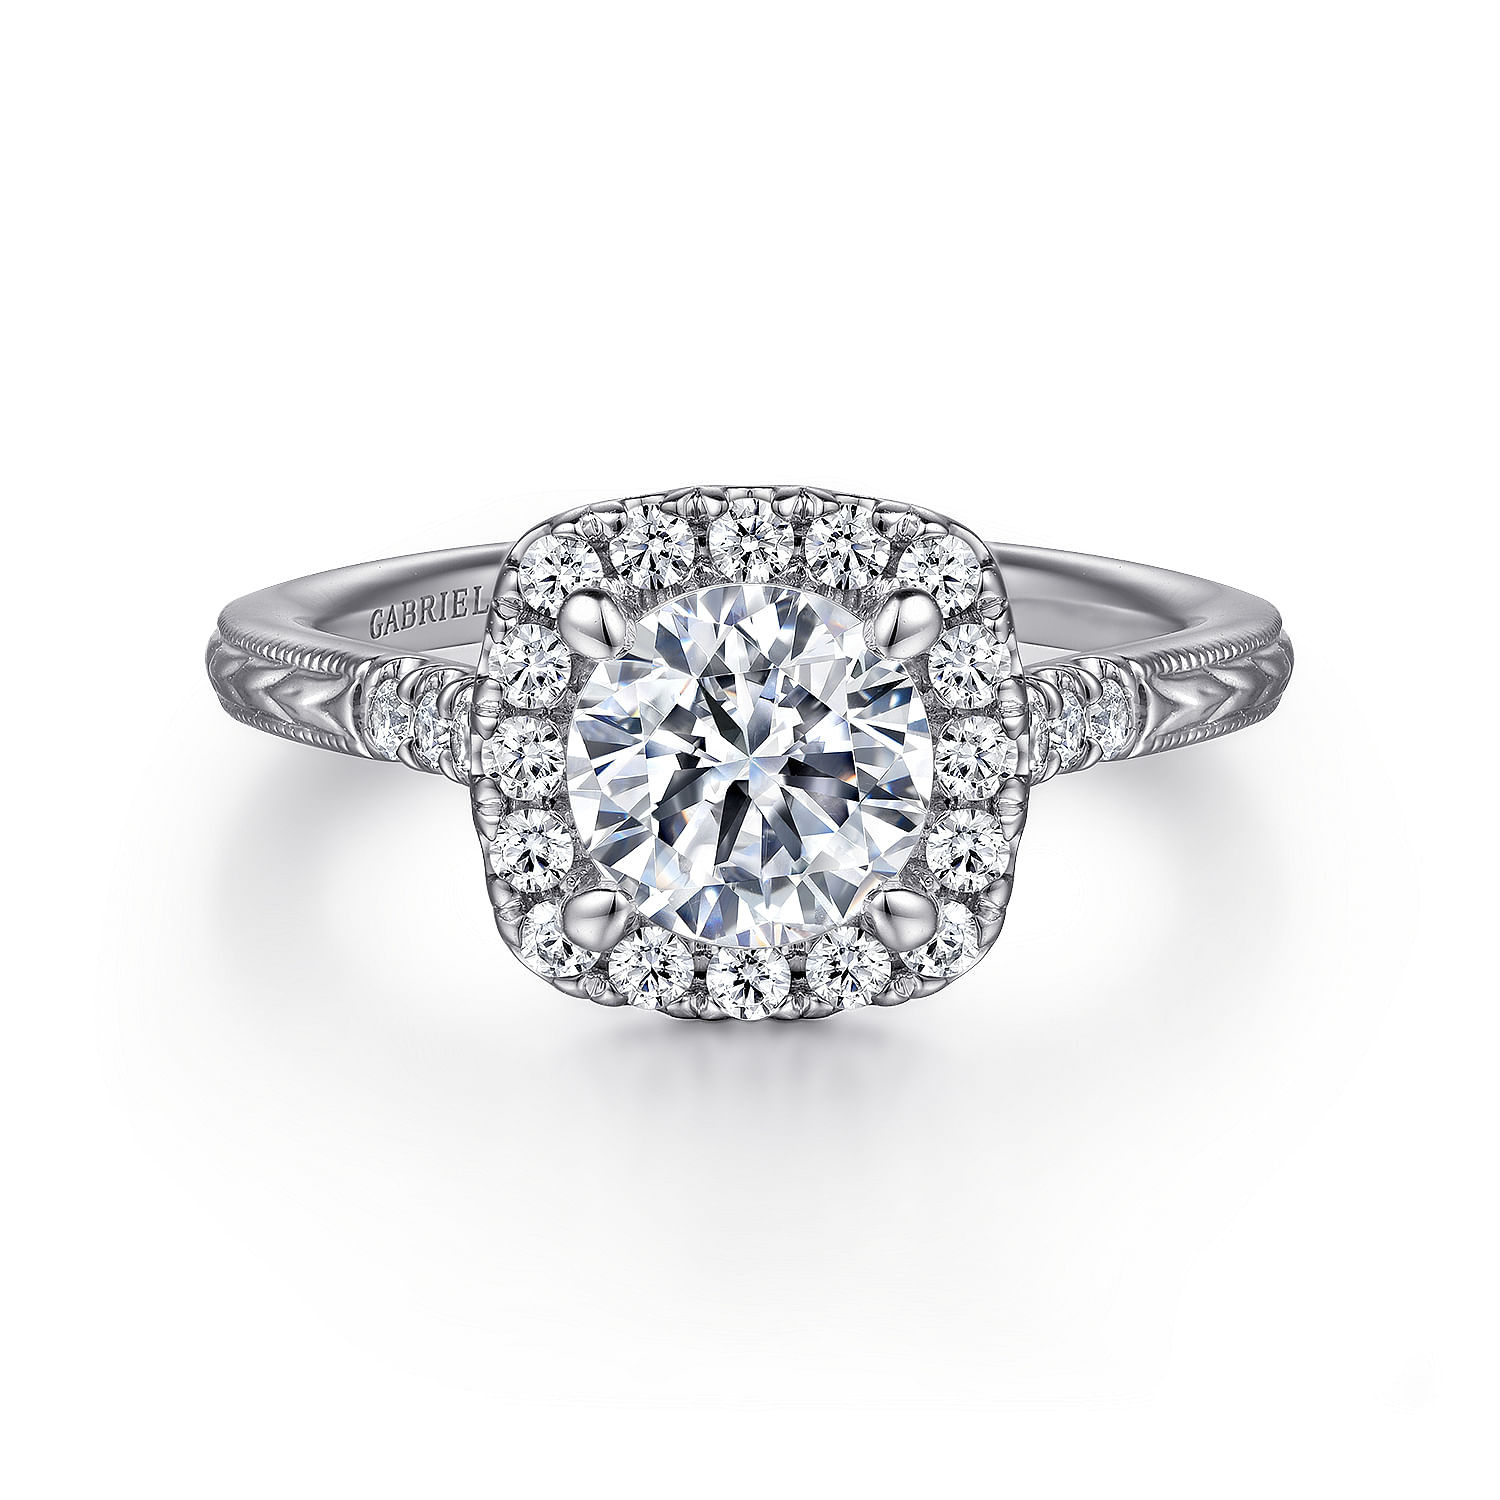 Audrey - Vintage Inspired 14K White Gold Round Halo Diamond Engagement Ring